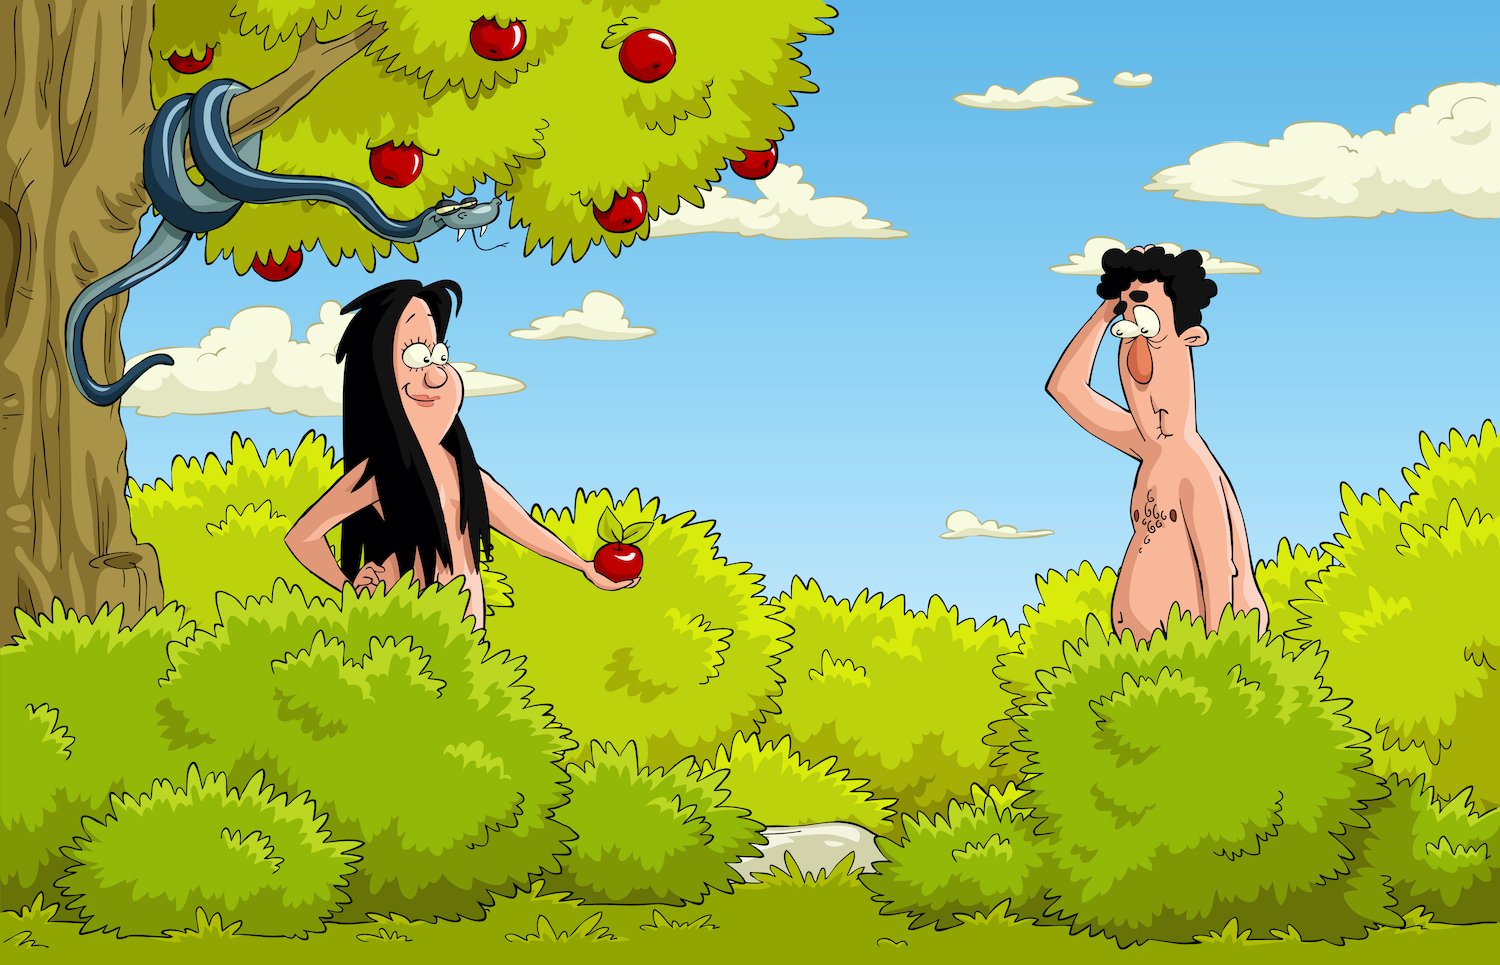 cartoonish representation of Adam and Eve in the Garden of Eden